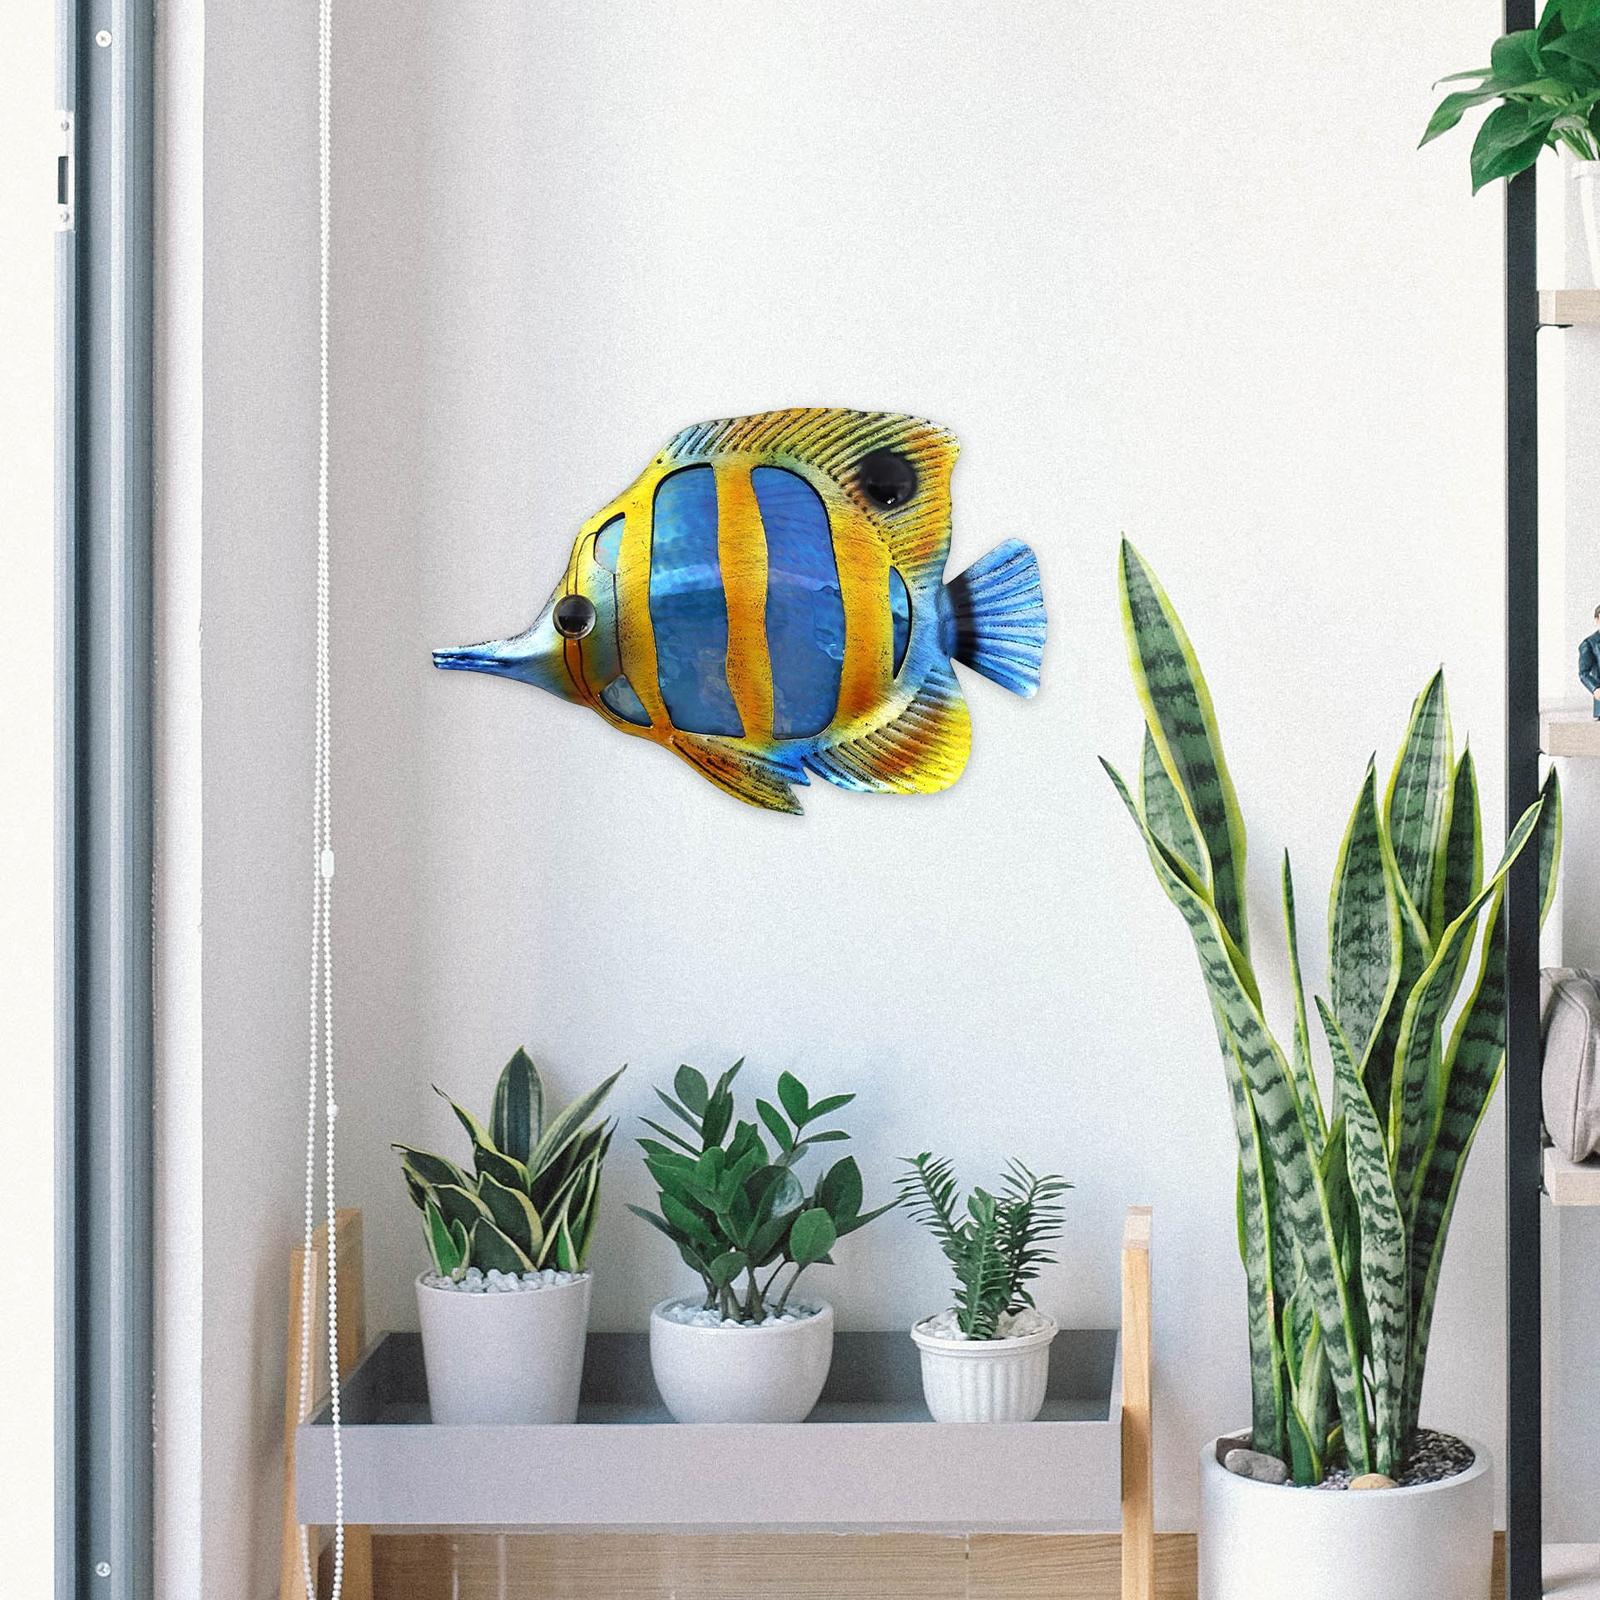 Modern Fish Wall Sculpture Art Decorative Wall Hanging Metal for Bathroom